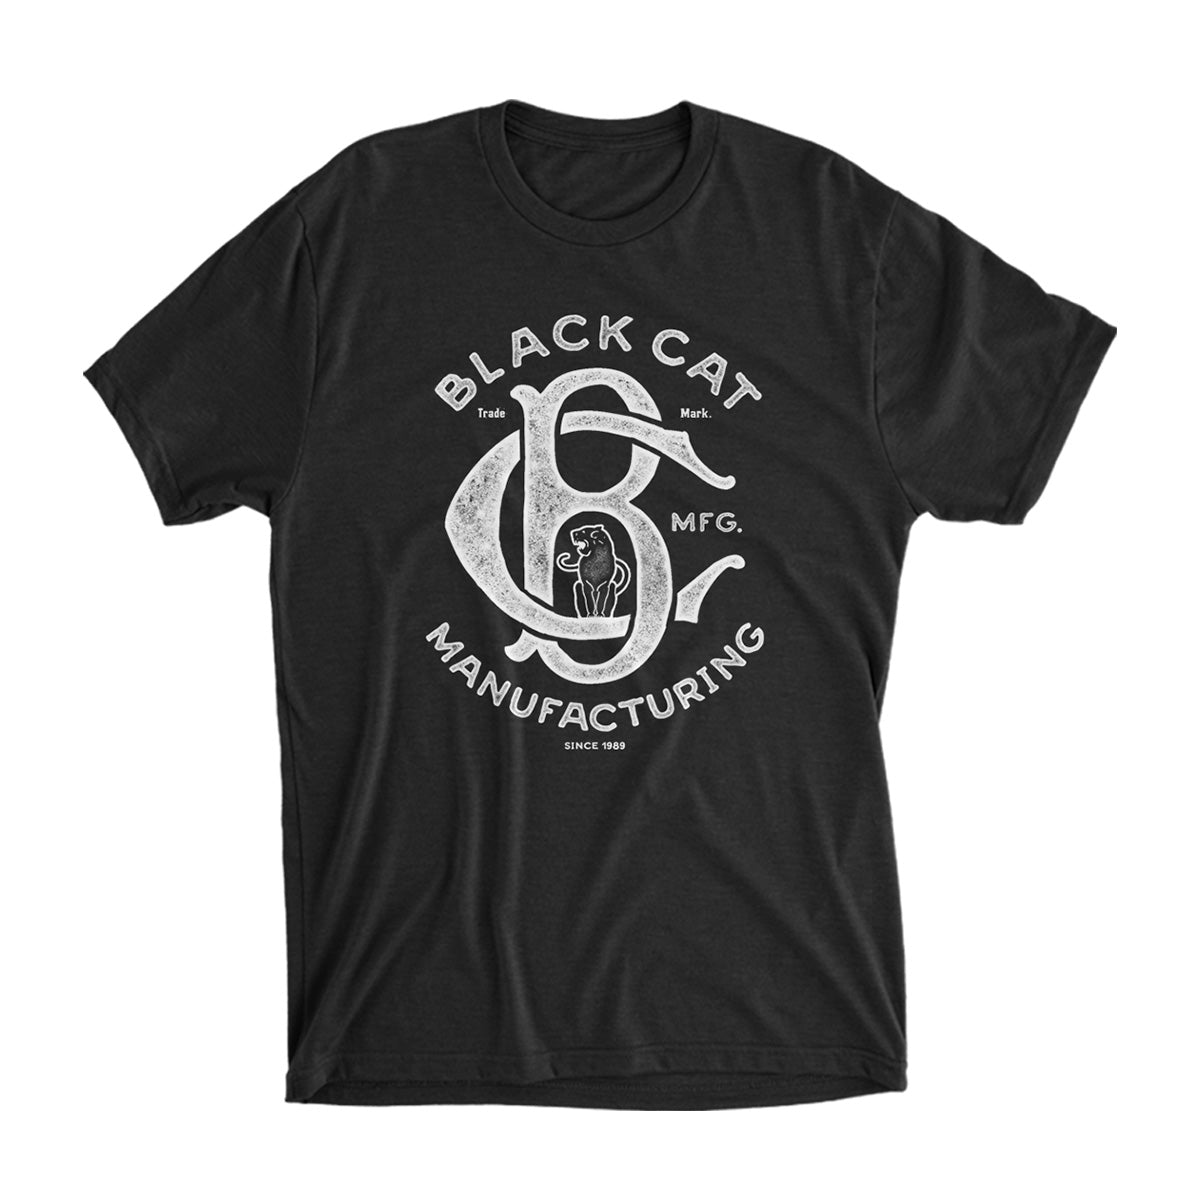 Monogram T-Shirt - Black Cat MFG - T-Shirt